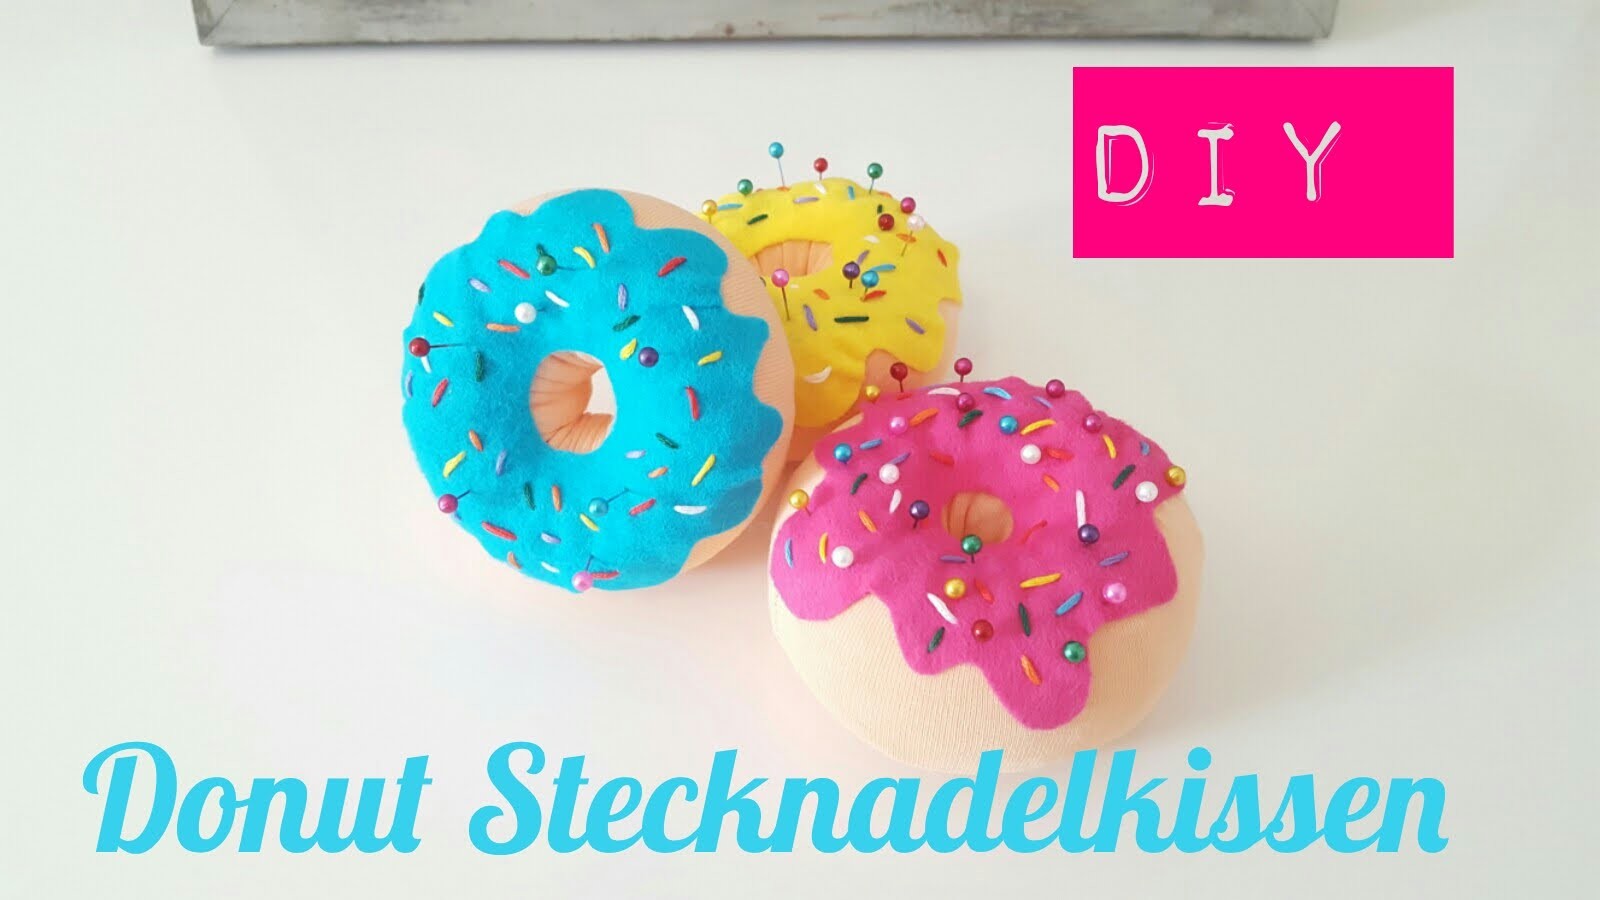 DIY Stecknadelkissen Donut selber machen (No Sew)